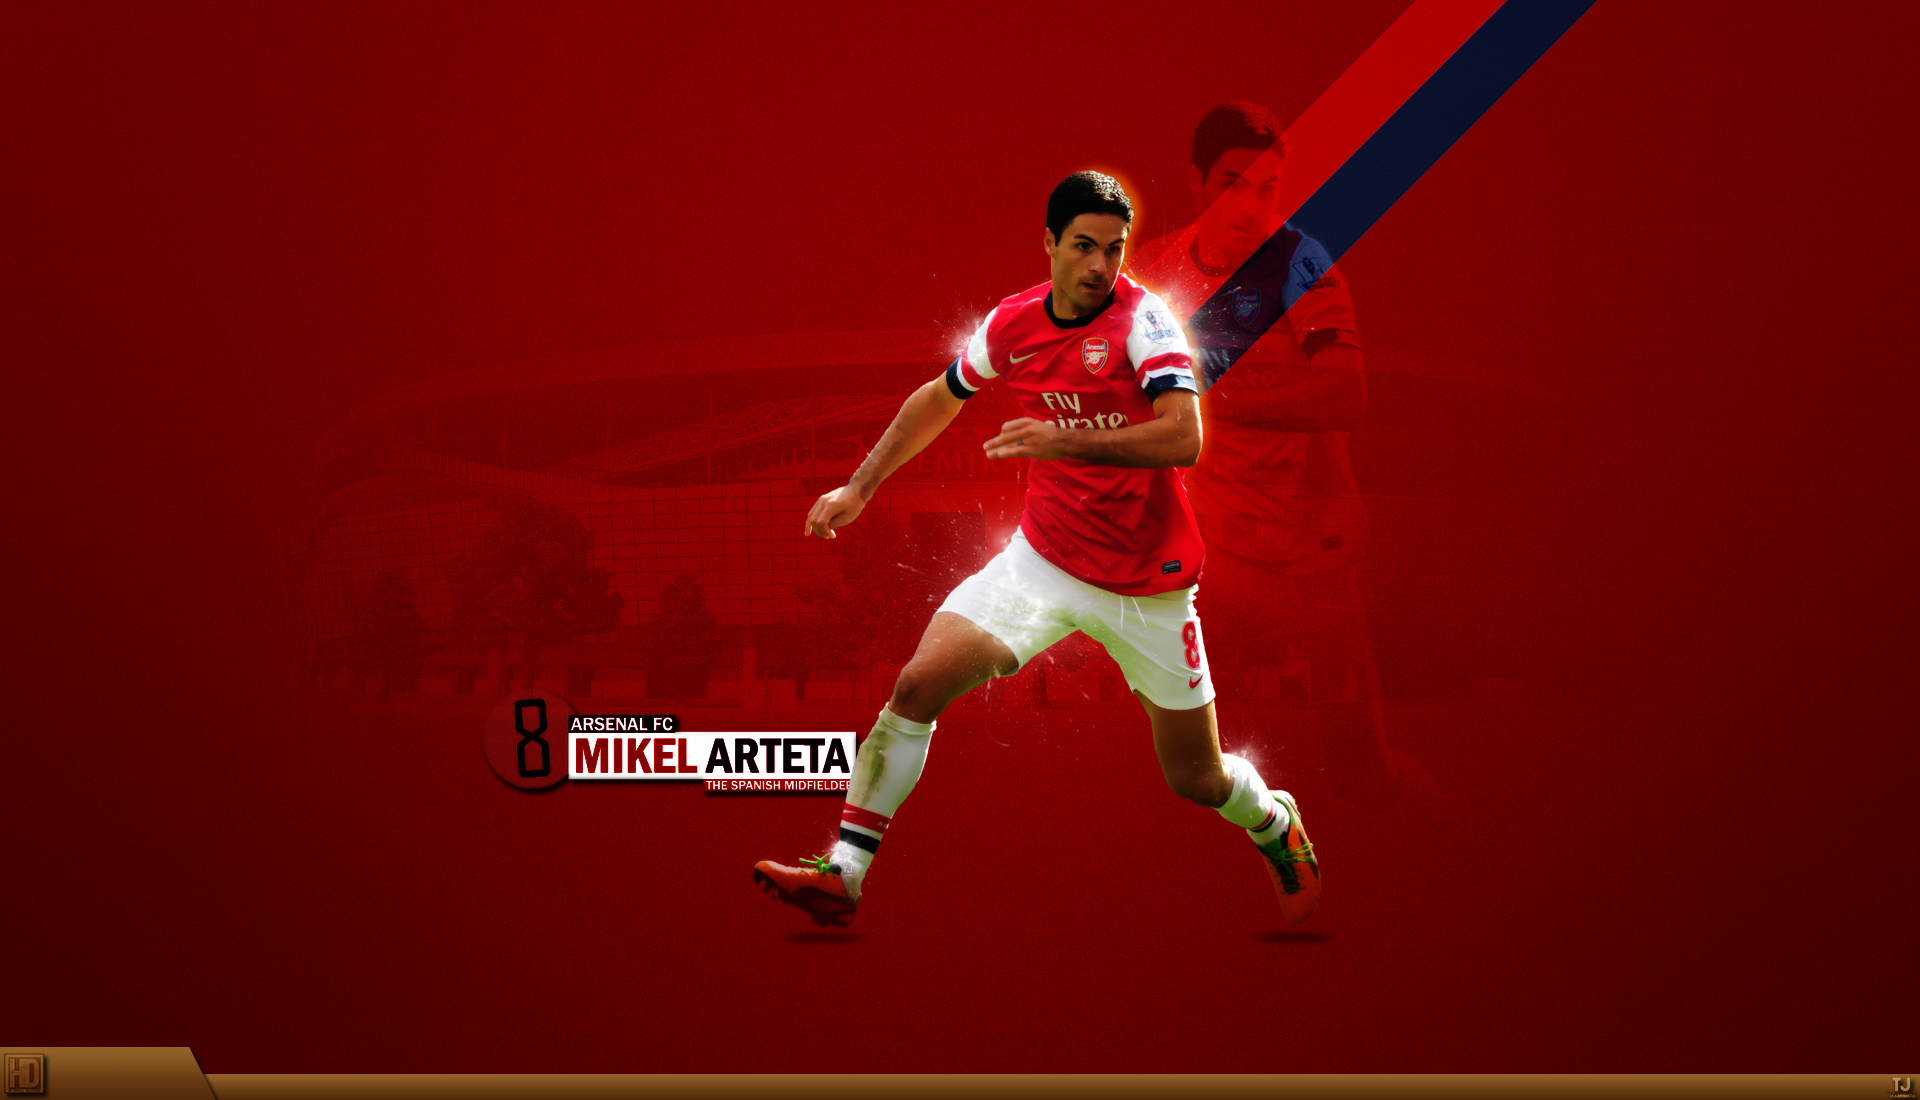 Descarga gratuita de fondo de pantalla para móvil de Fútbol, Deporte, Arsenal Fc, Mikel Arteta.